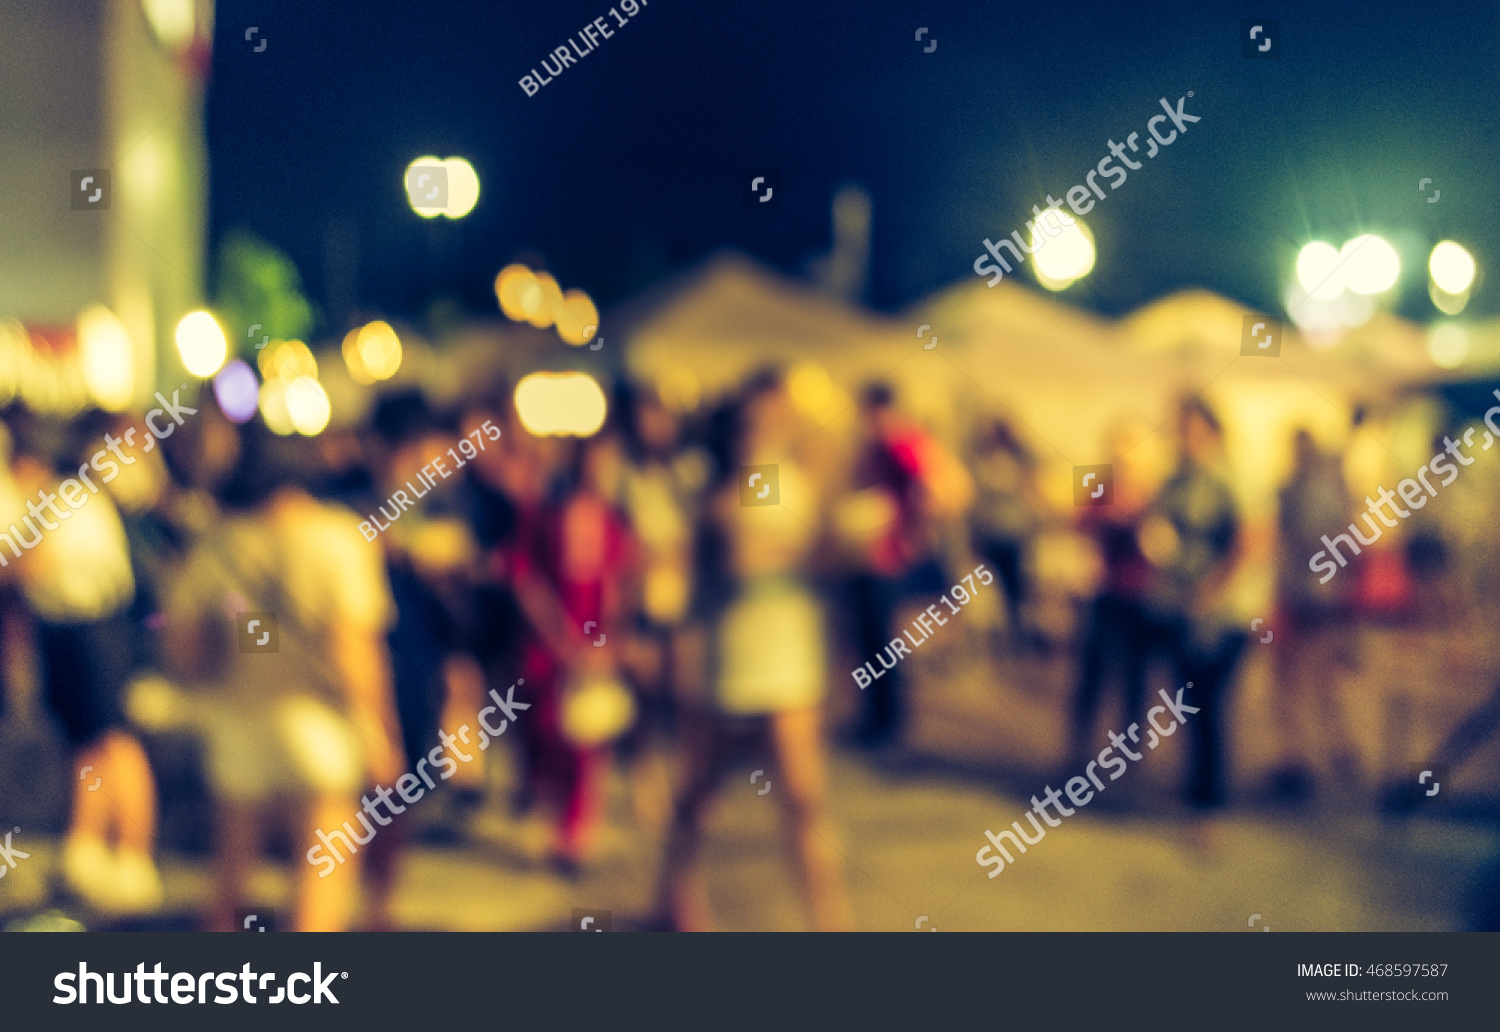 Vintage Tone Blur Image Night Festival Stock Photo 468597587 - Shutterstock